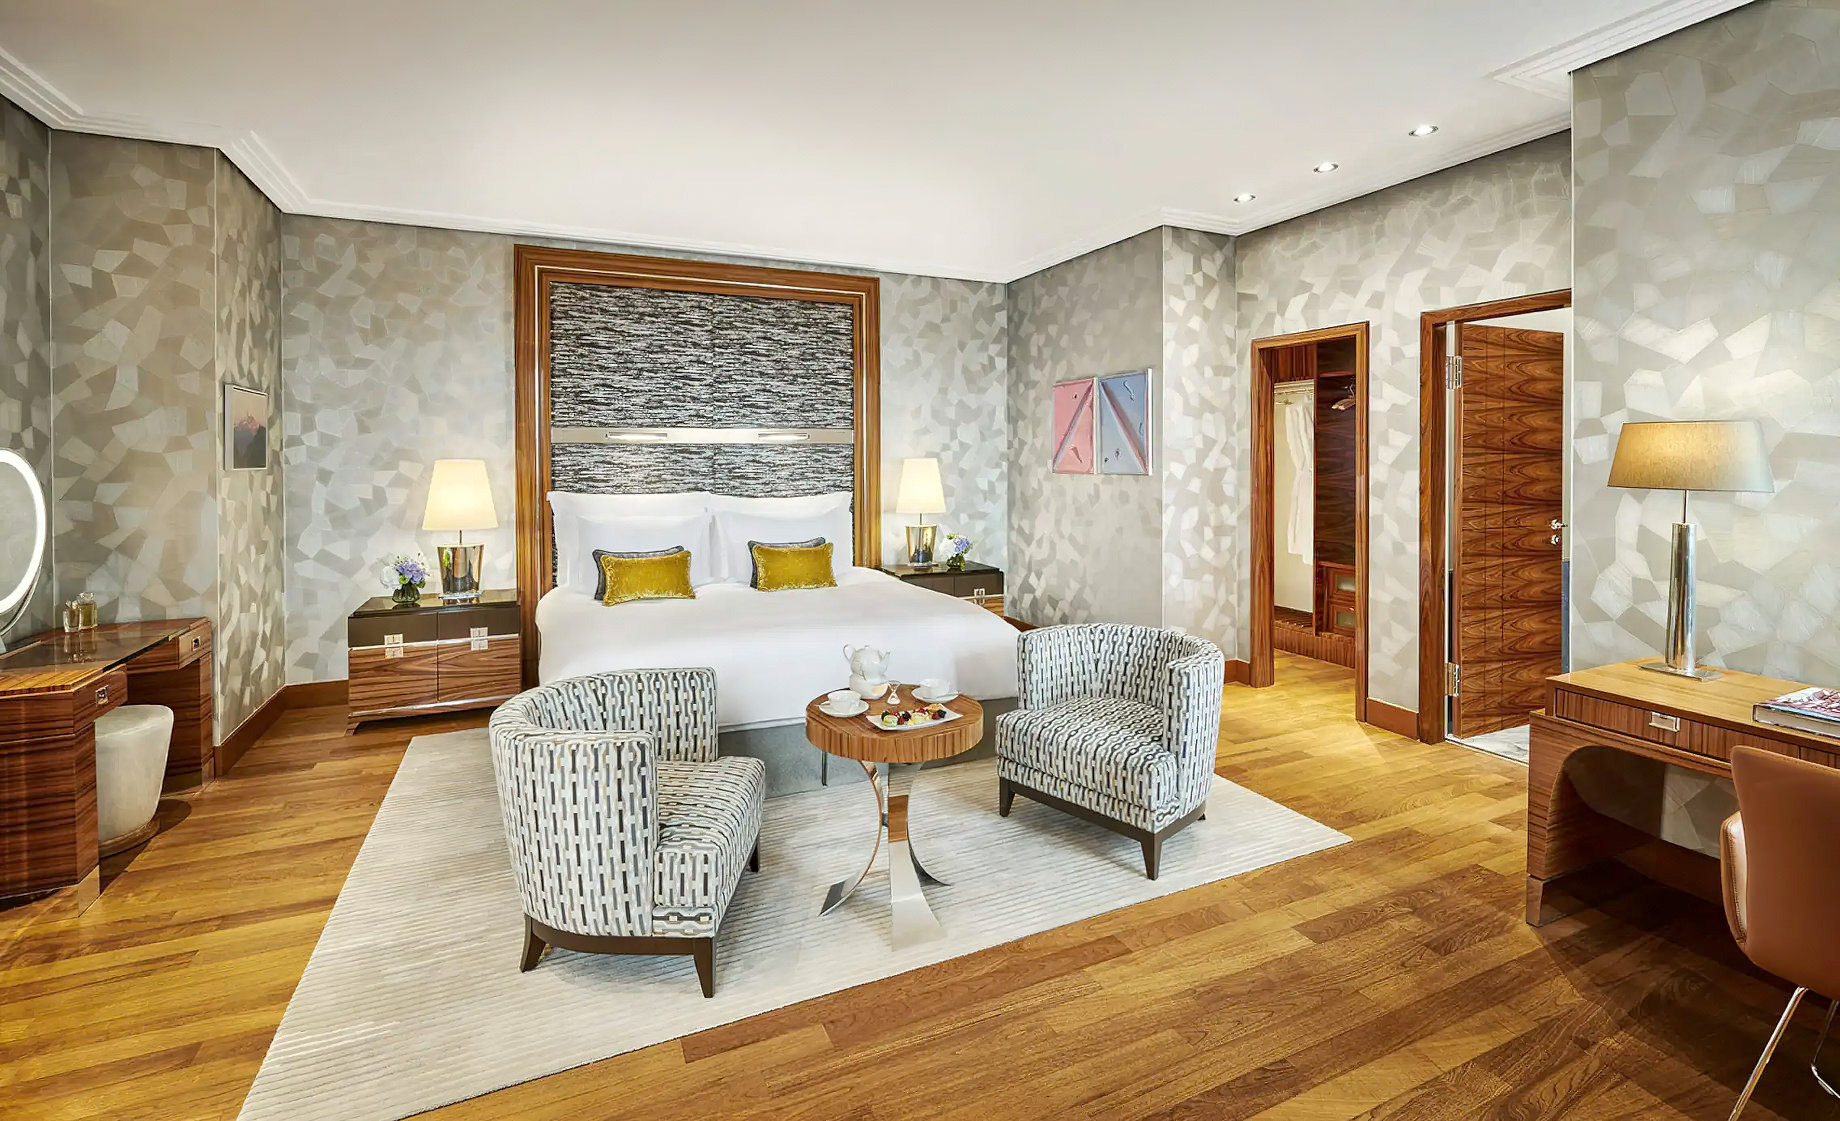 Mandarin Oriental, Munich Hotel - Munich, Germany - Presidential Suite Bedroom